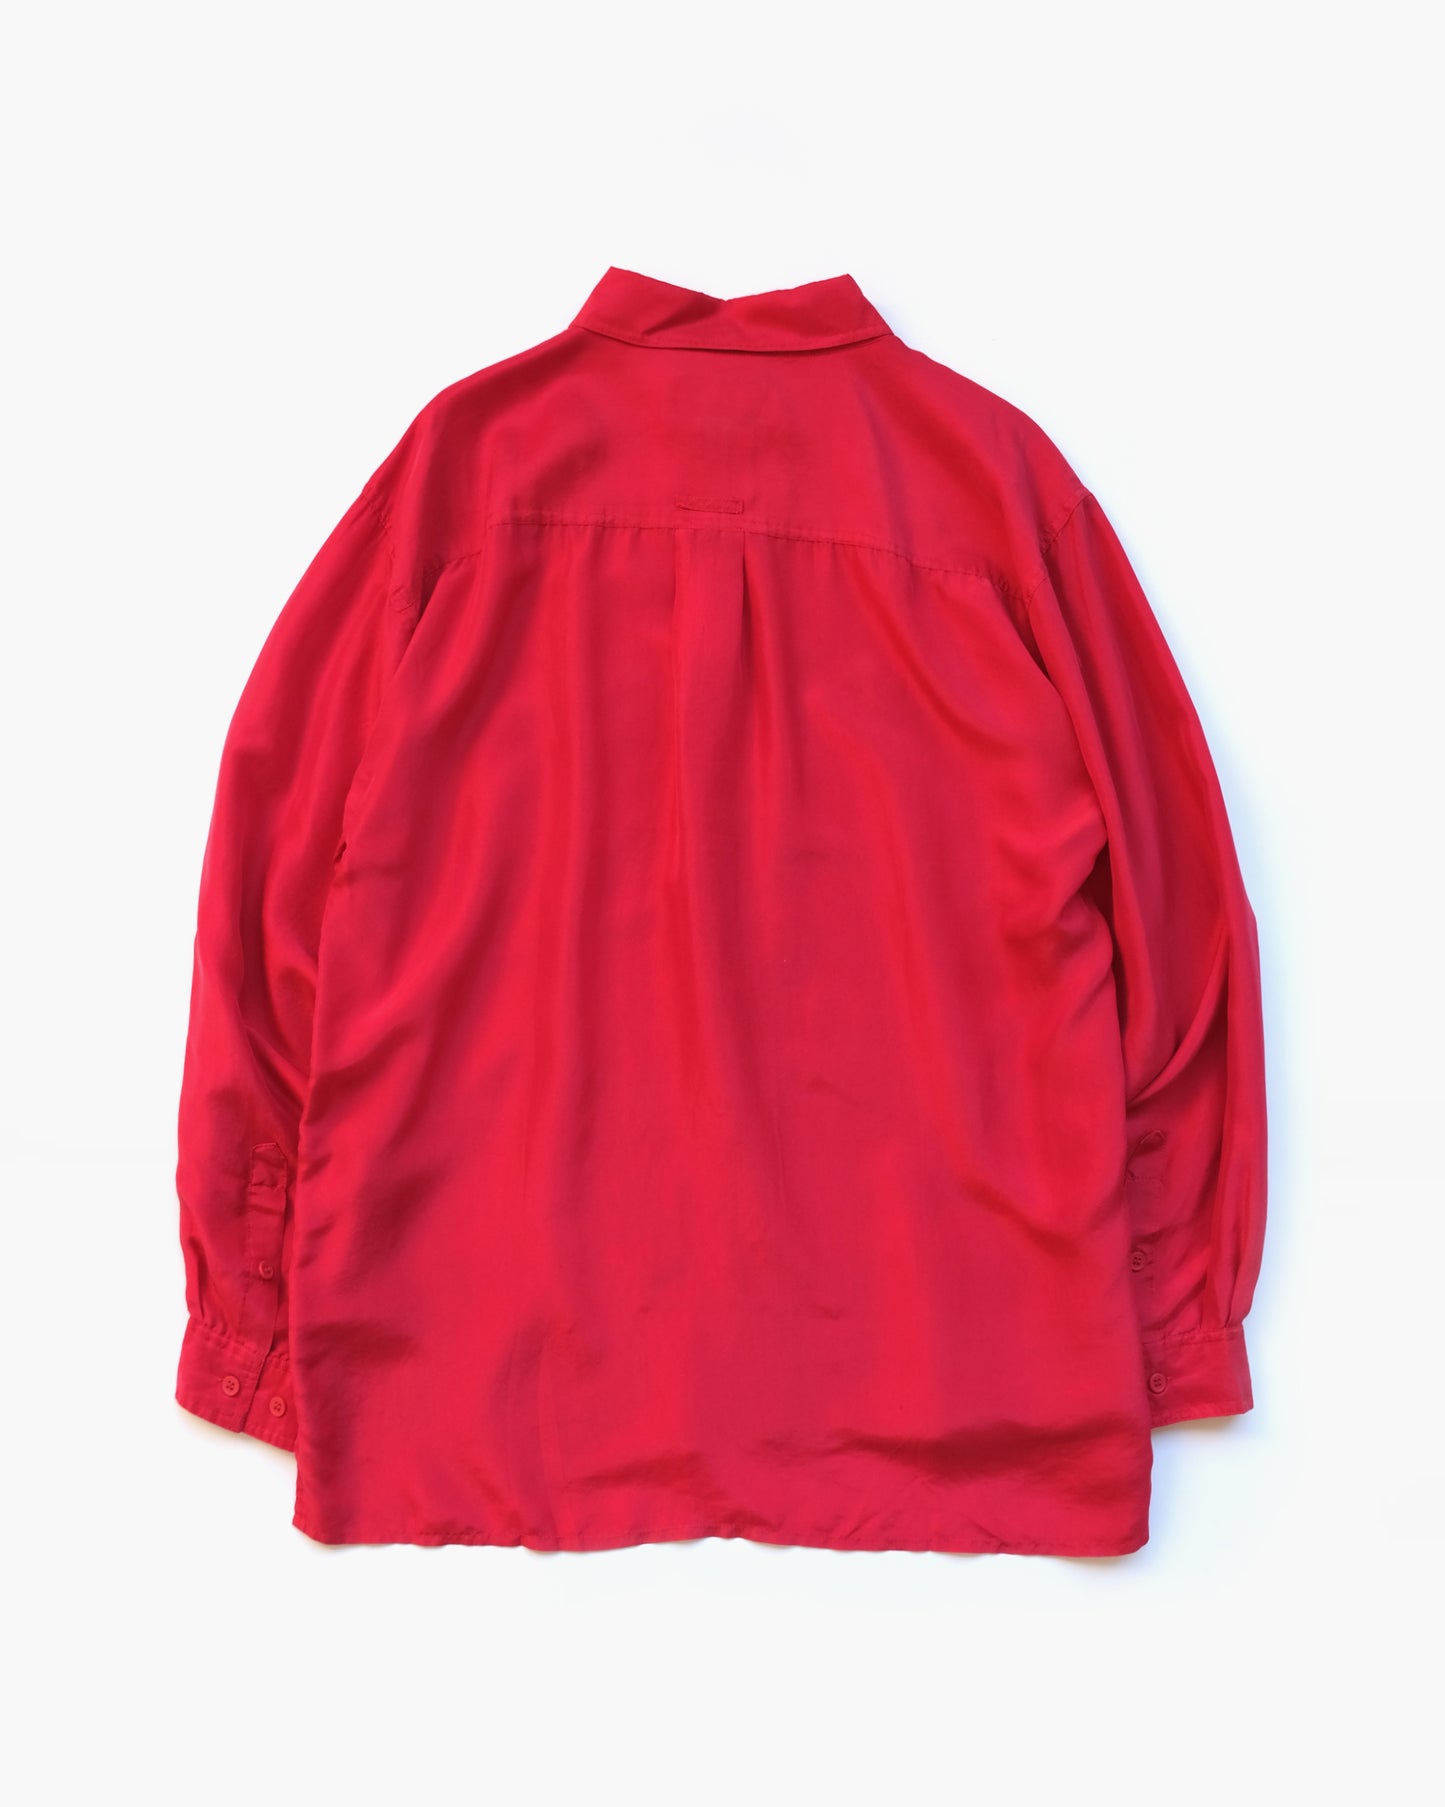 N.O.S  100% Silk Shirts - Red